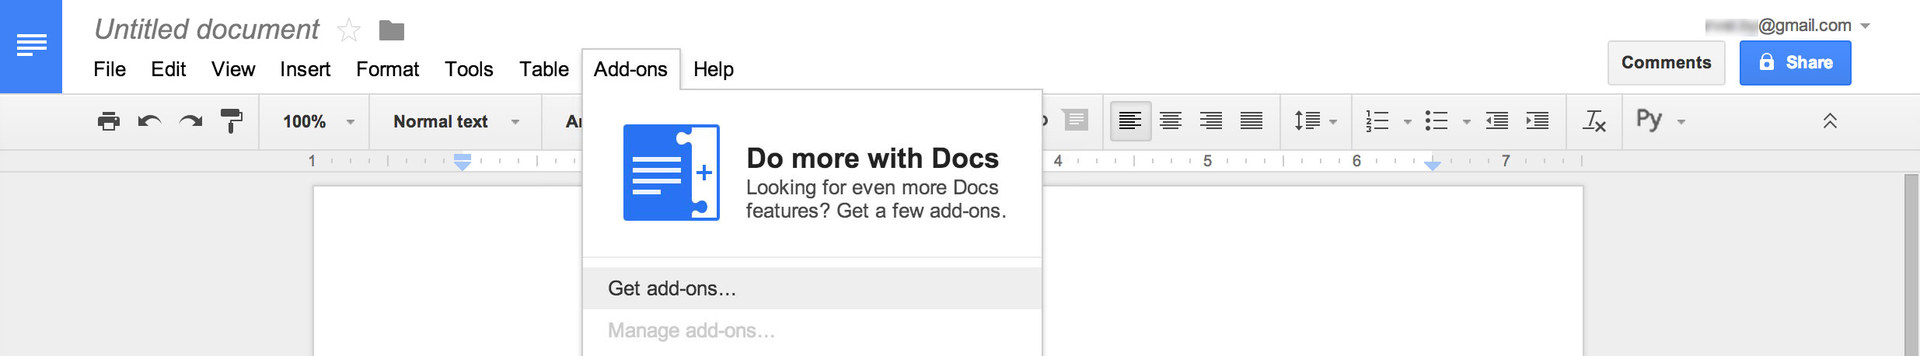 Google запустила Add ons для Google Docs и Sheets